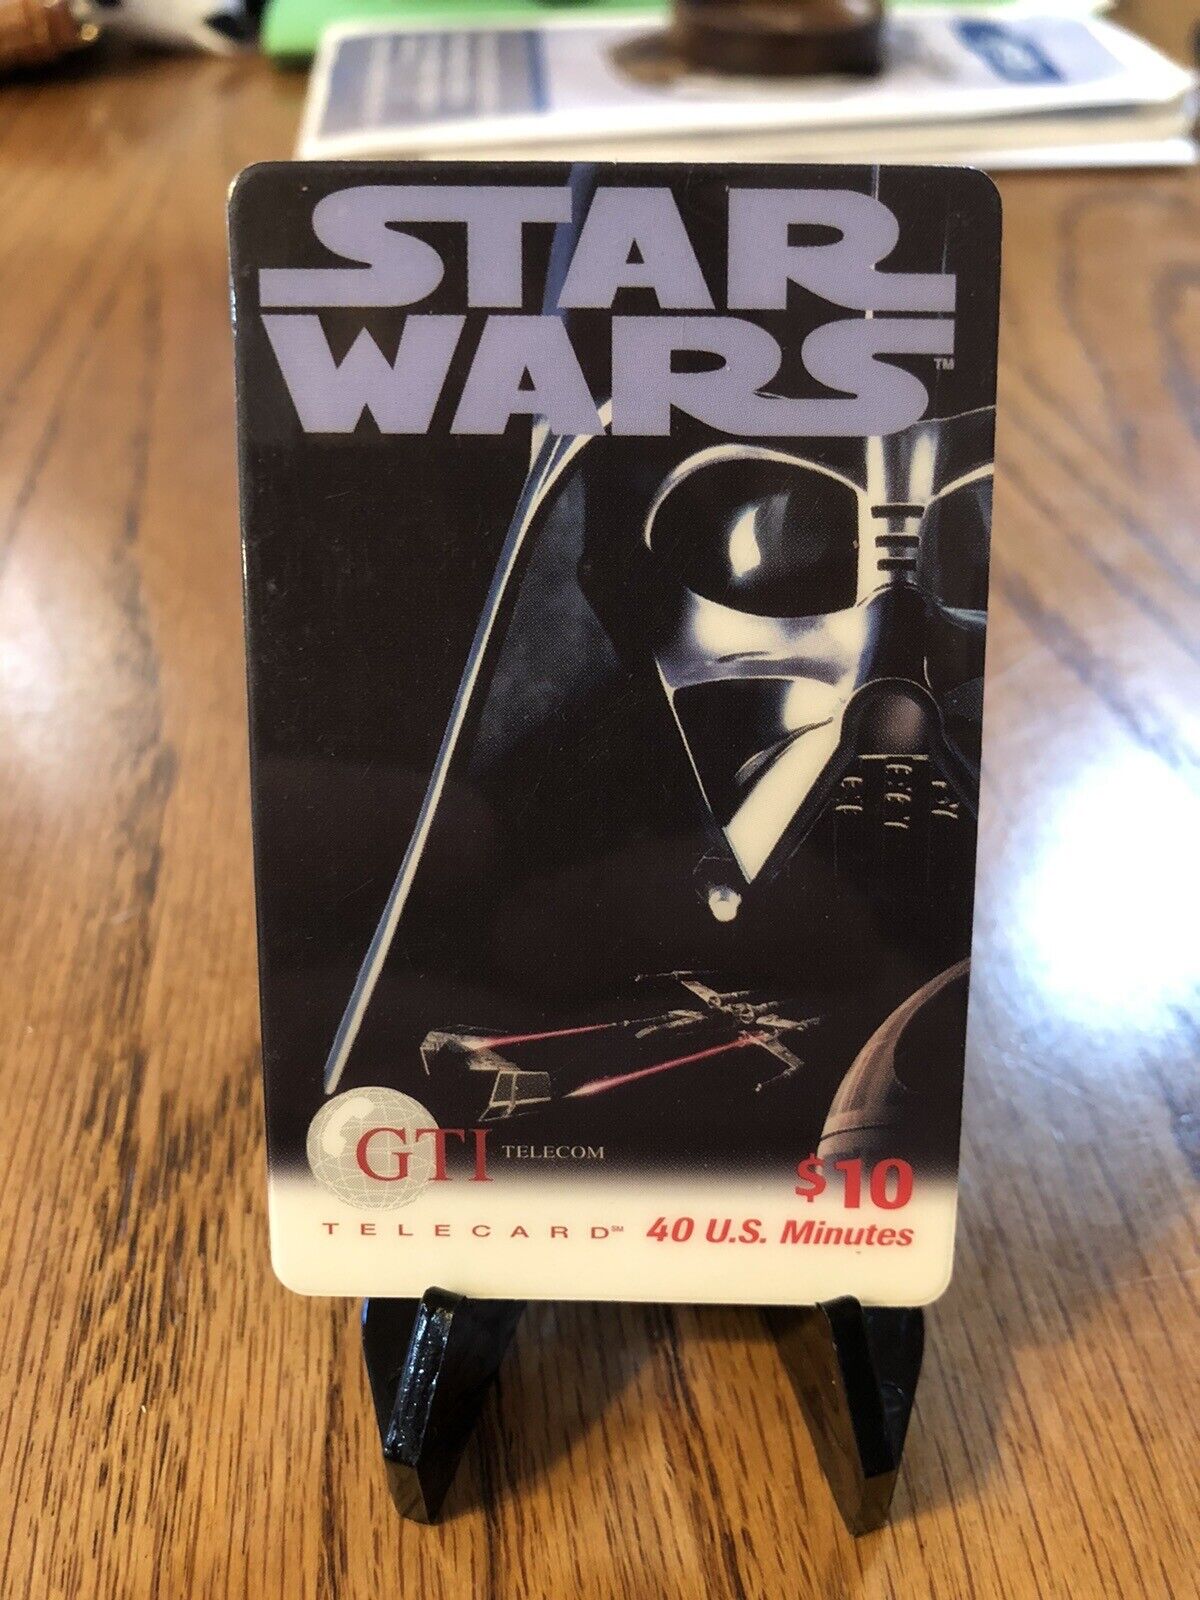 GTI Telecom Telecard Phone Card Star Wars Darth Vader Movie